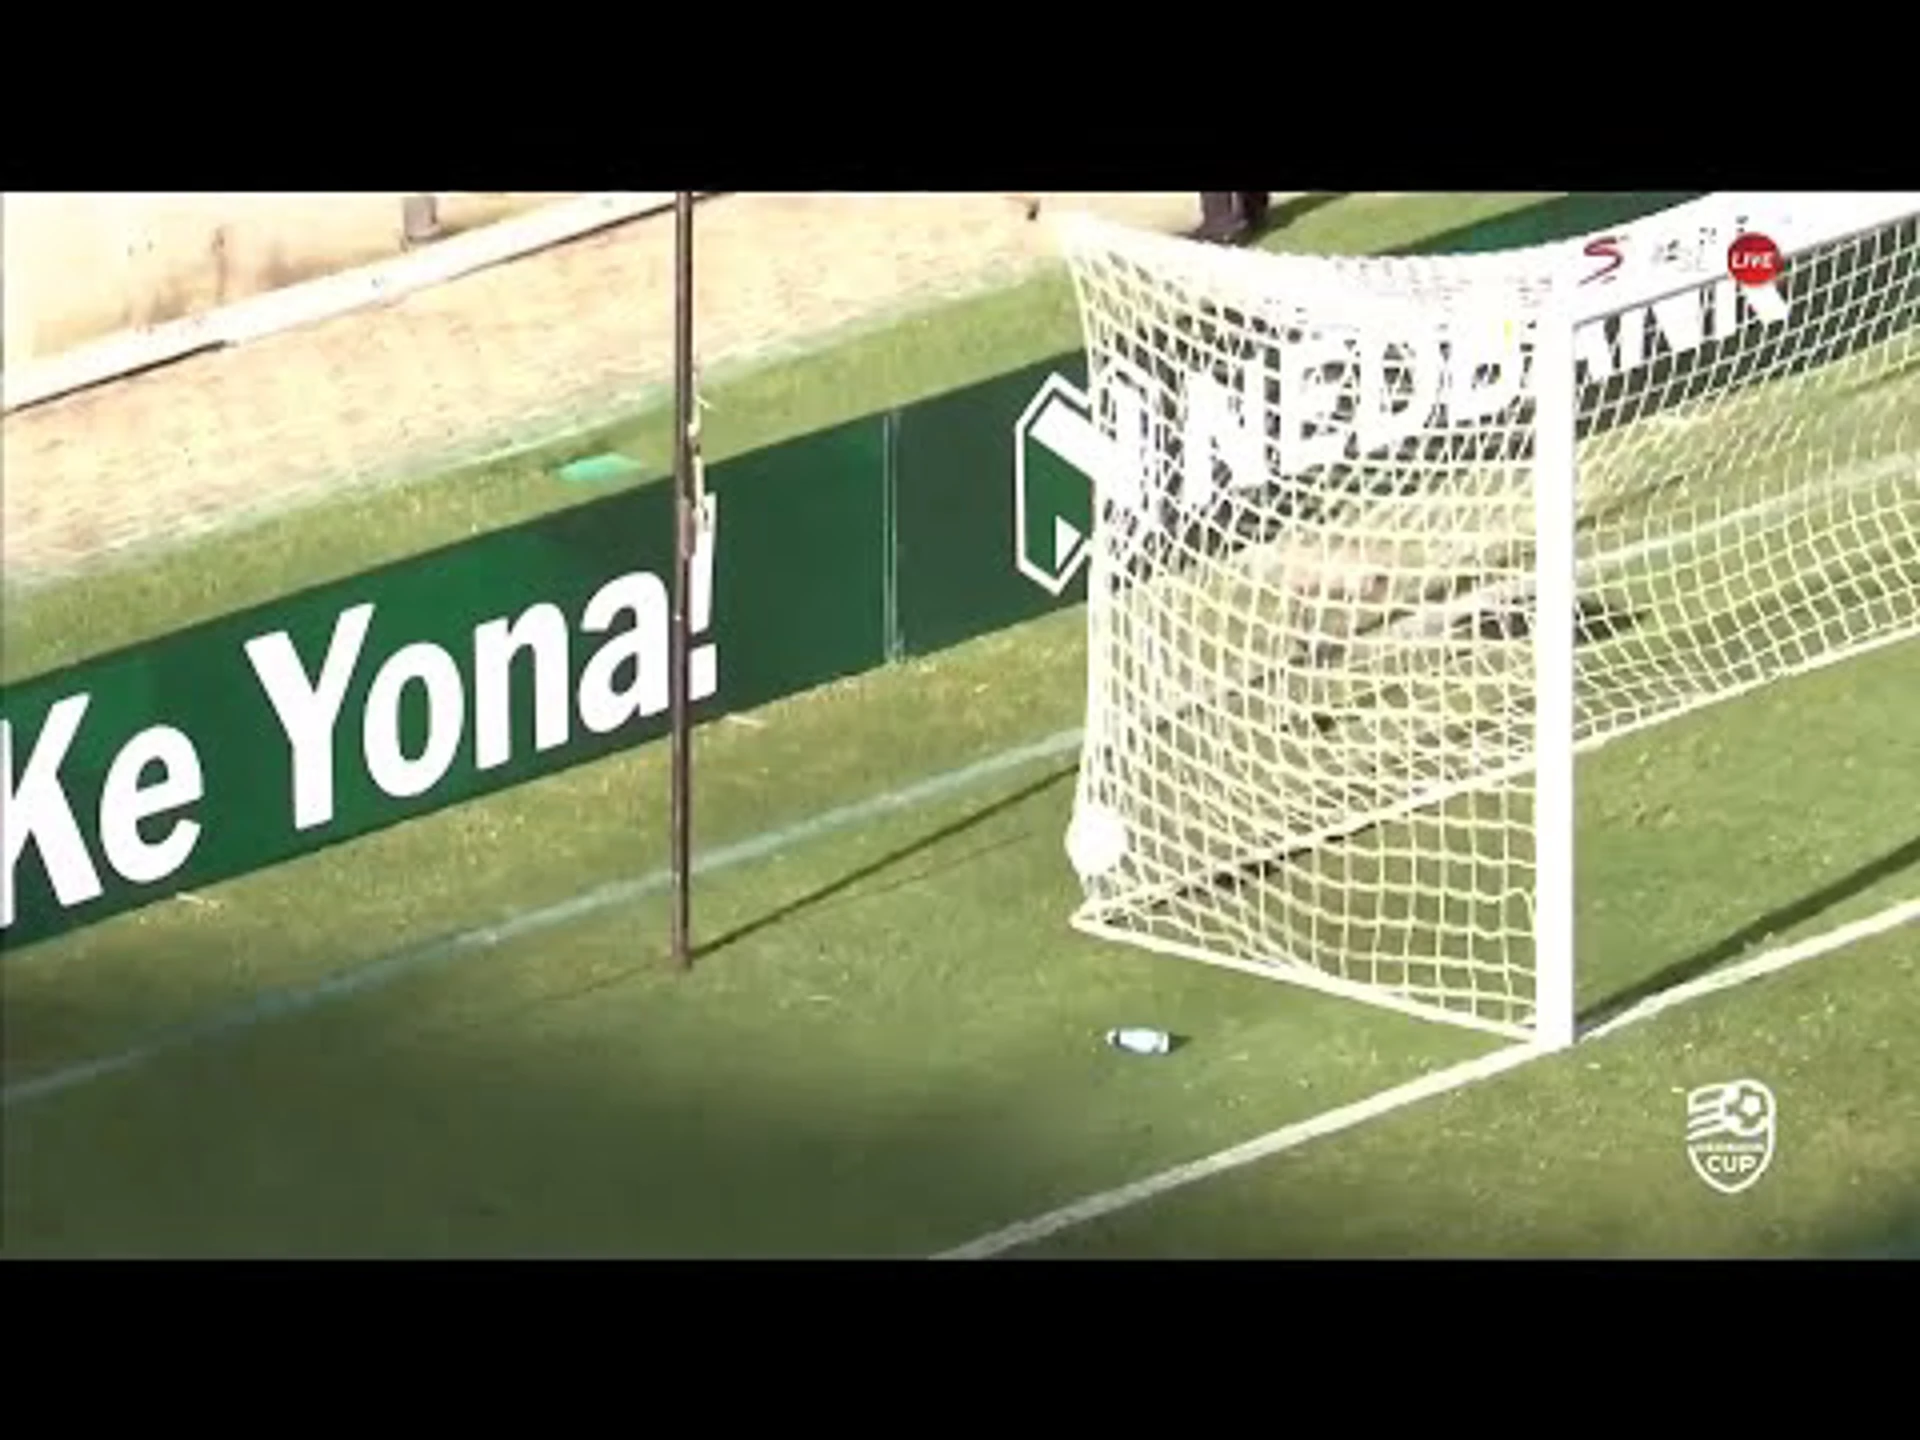 Iqraam Rayners with a Goal vs. TS Galaxy